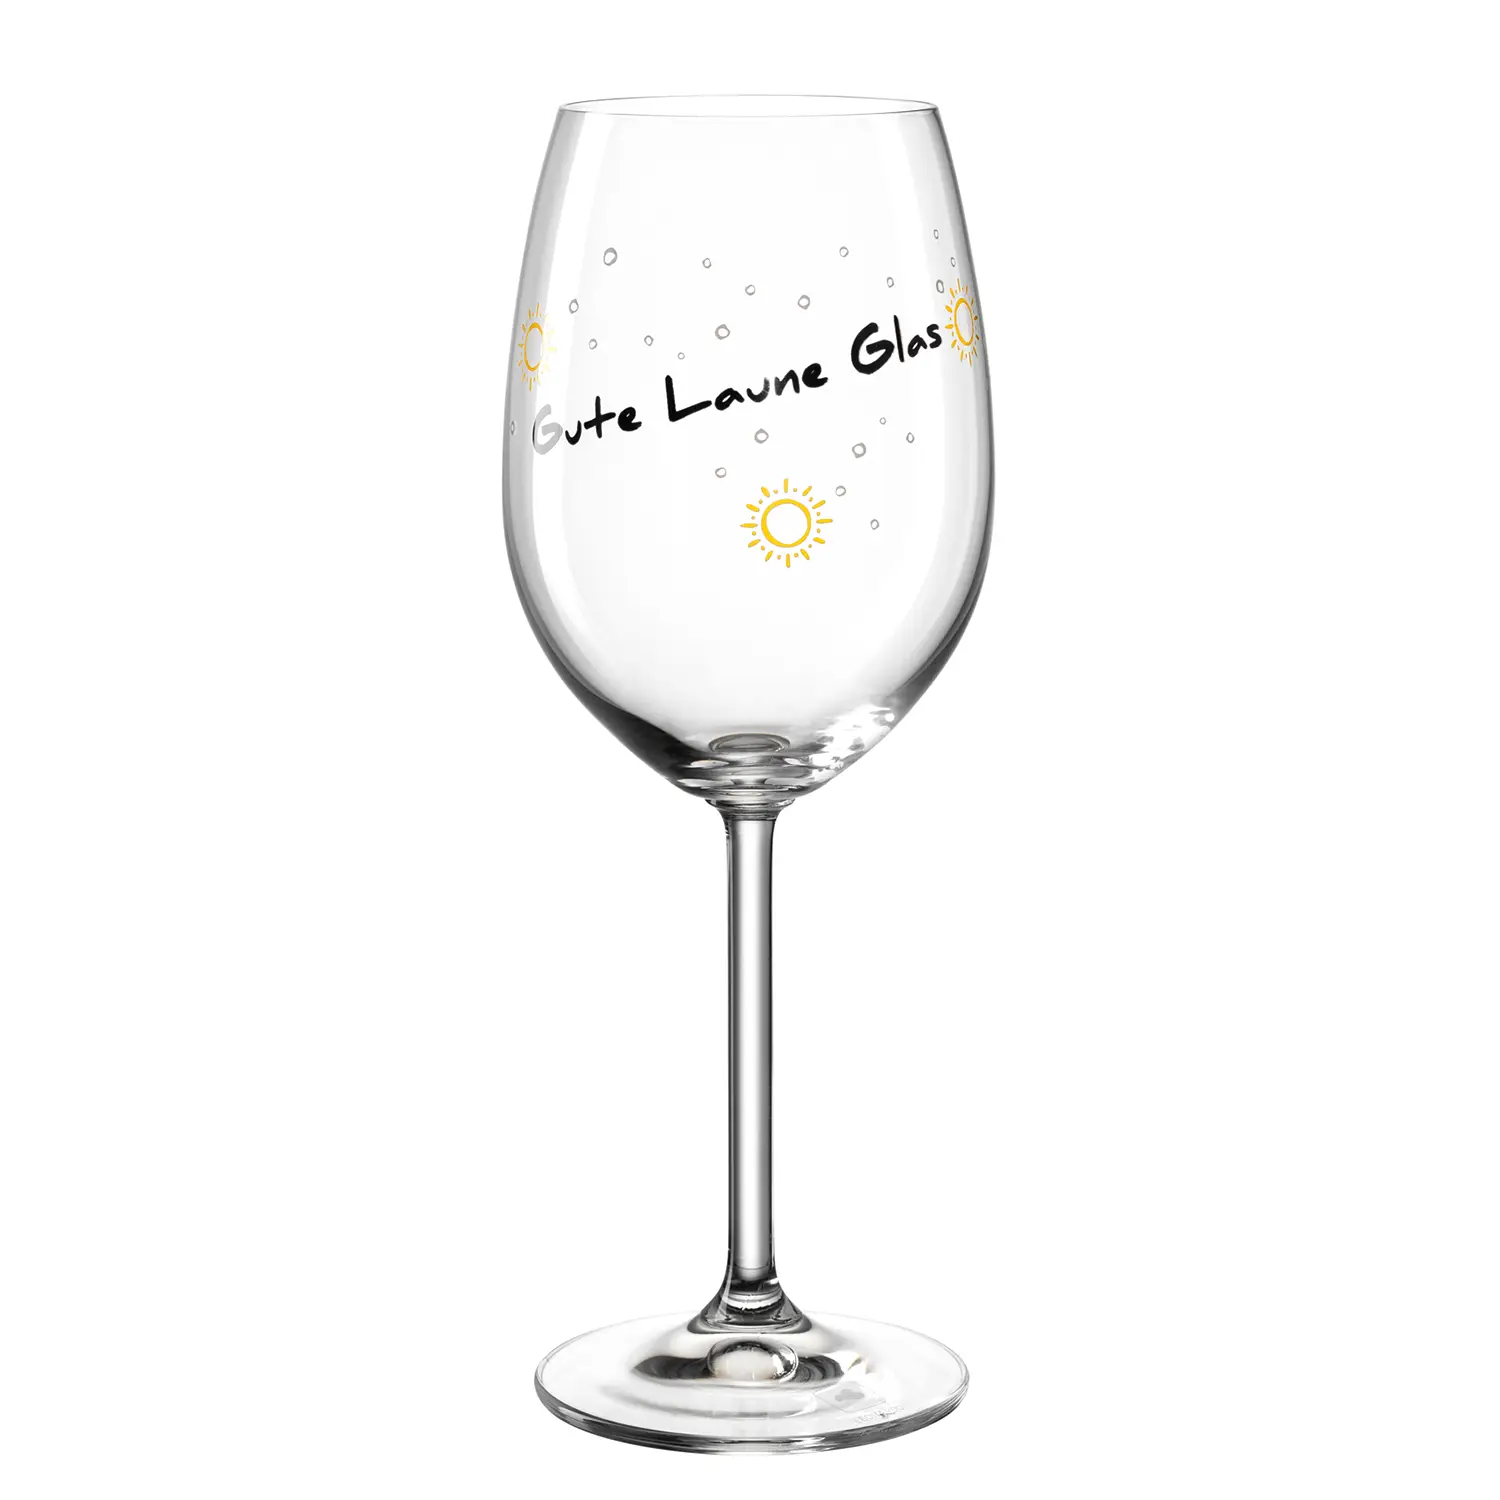 Laune Gute Presente Weinglas 460